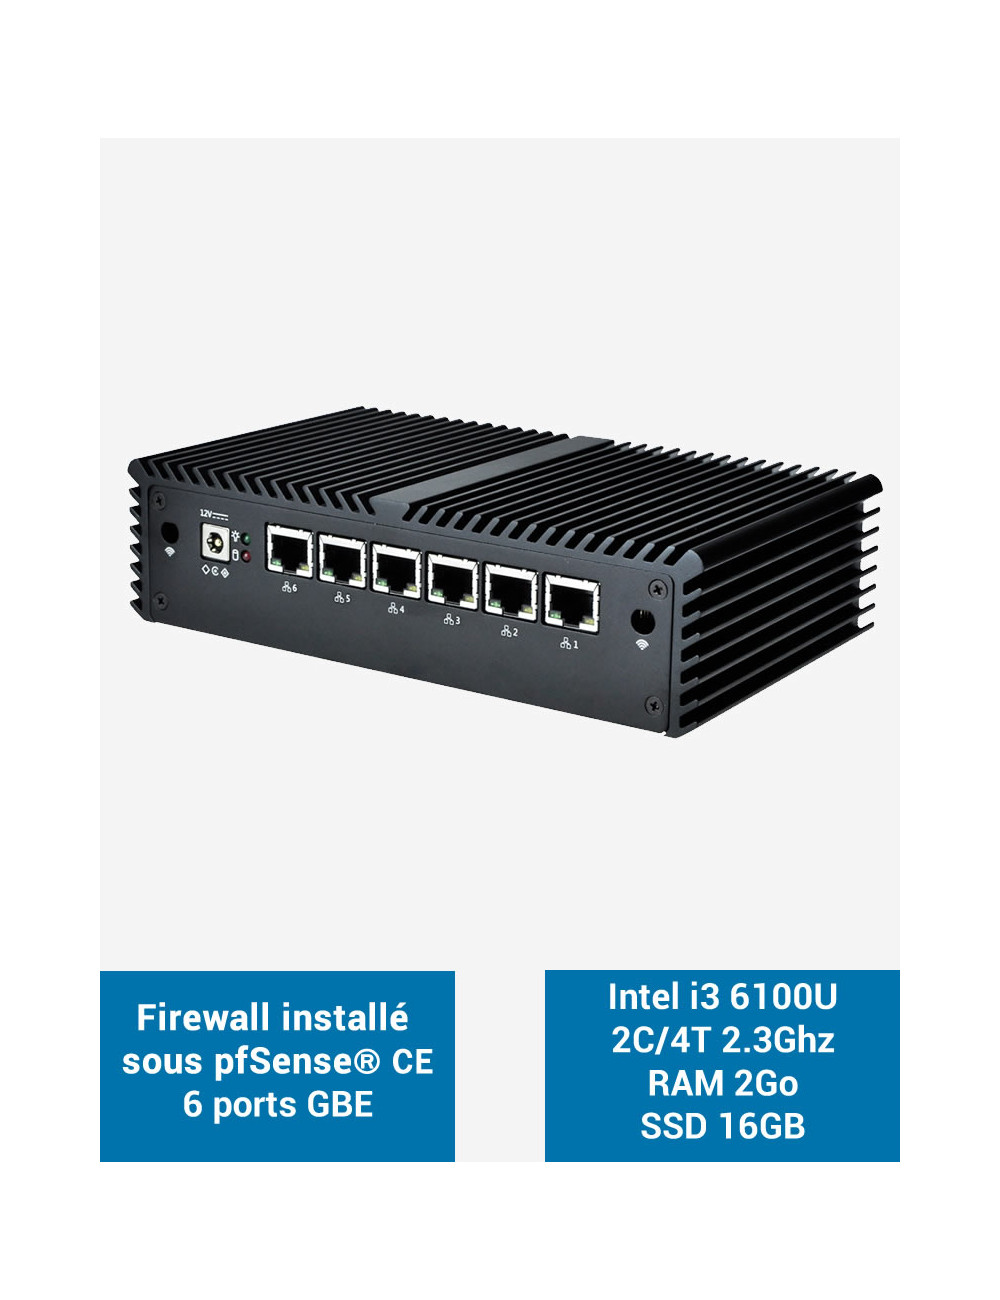 Firewall pfSense® Q5x Intel i3 6100U 6 ports Gigabit 2Go SSD 16Go